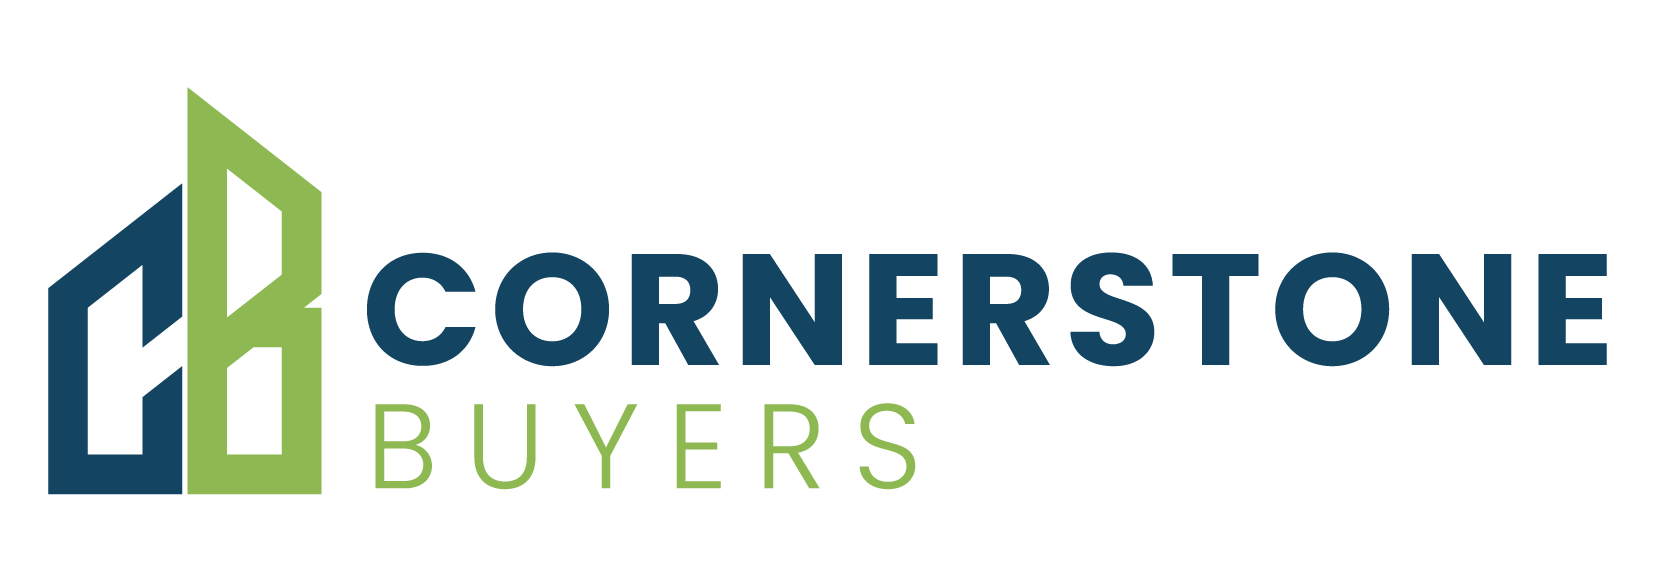 Cornerstone Buyers logo